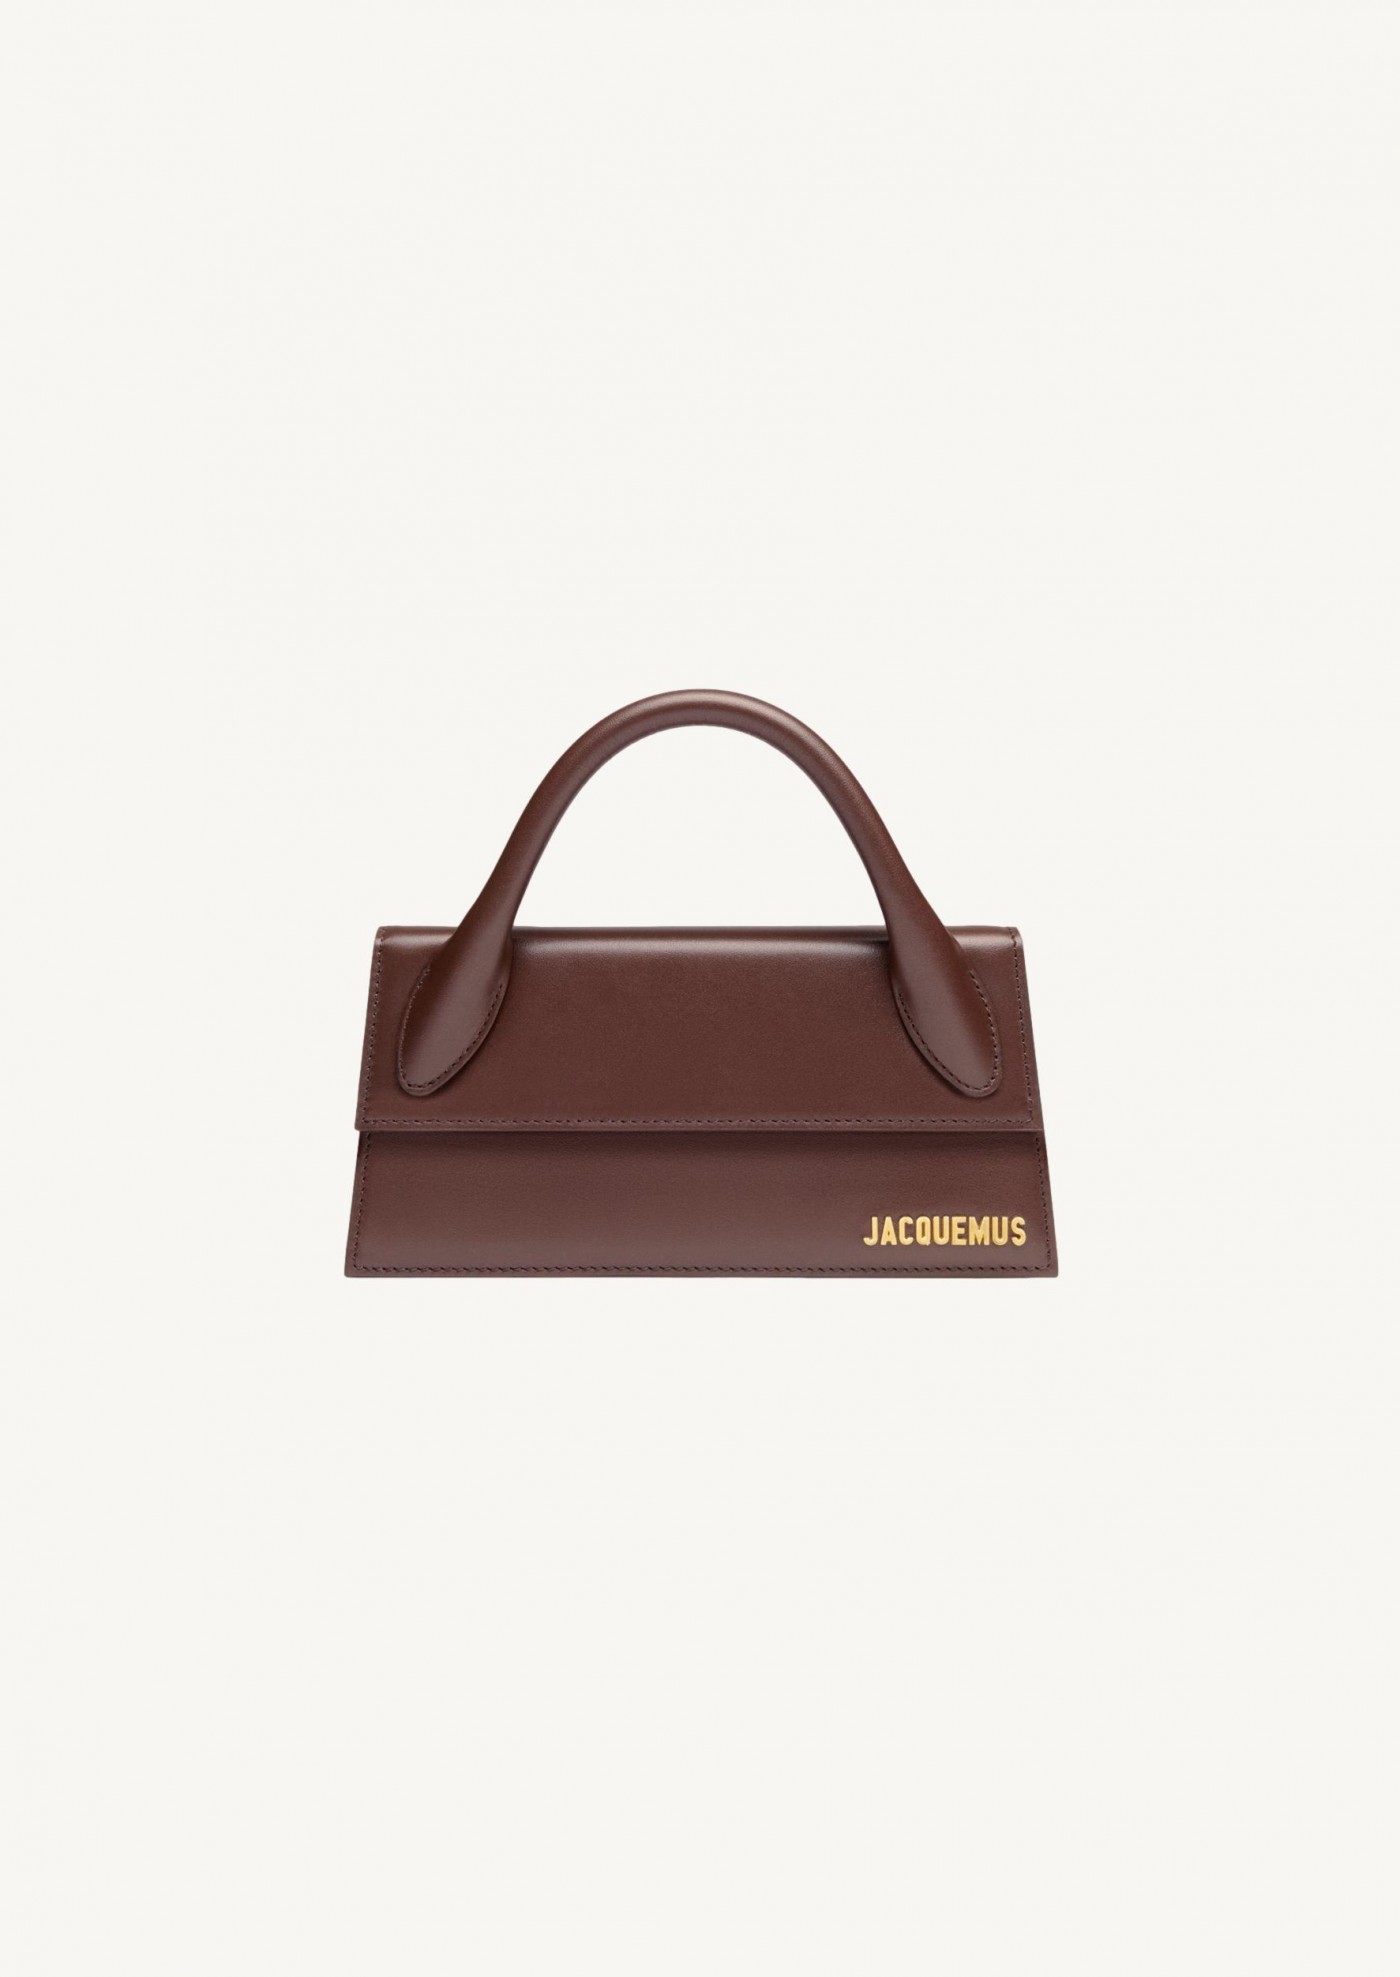 Jacquemus Chiquito Long Leather Handbag